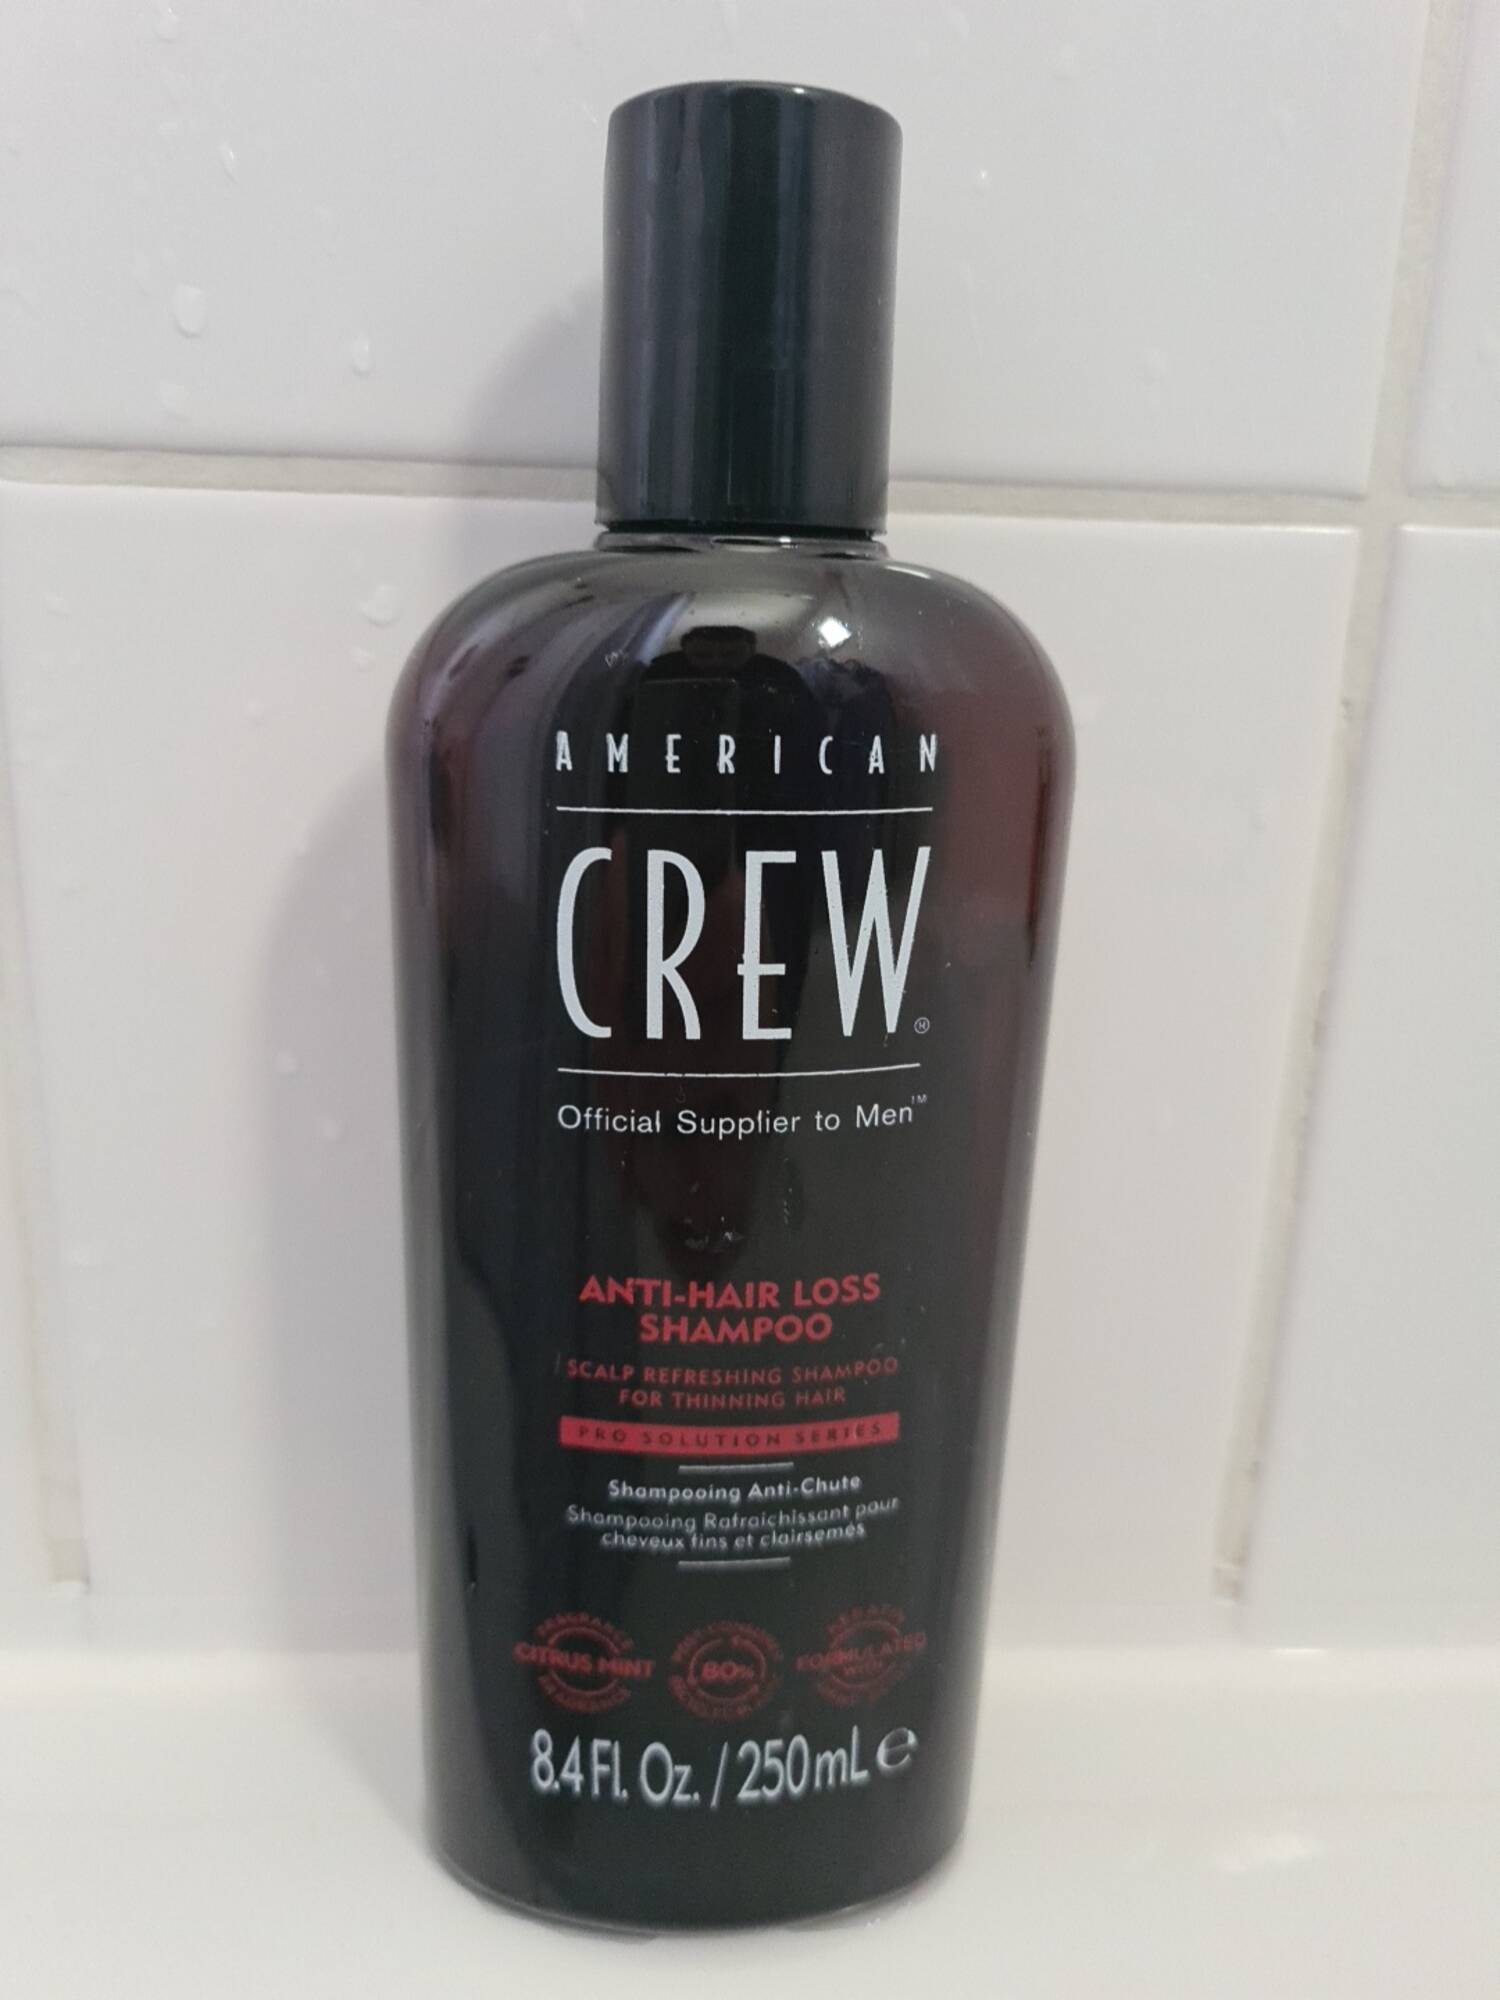 AMERICAN CREW - Anti-hair loss shampoo